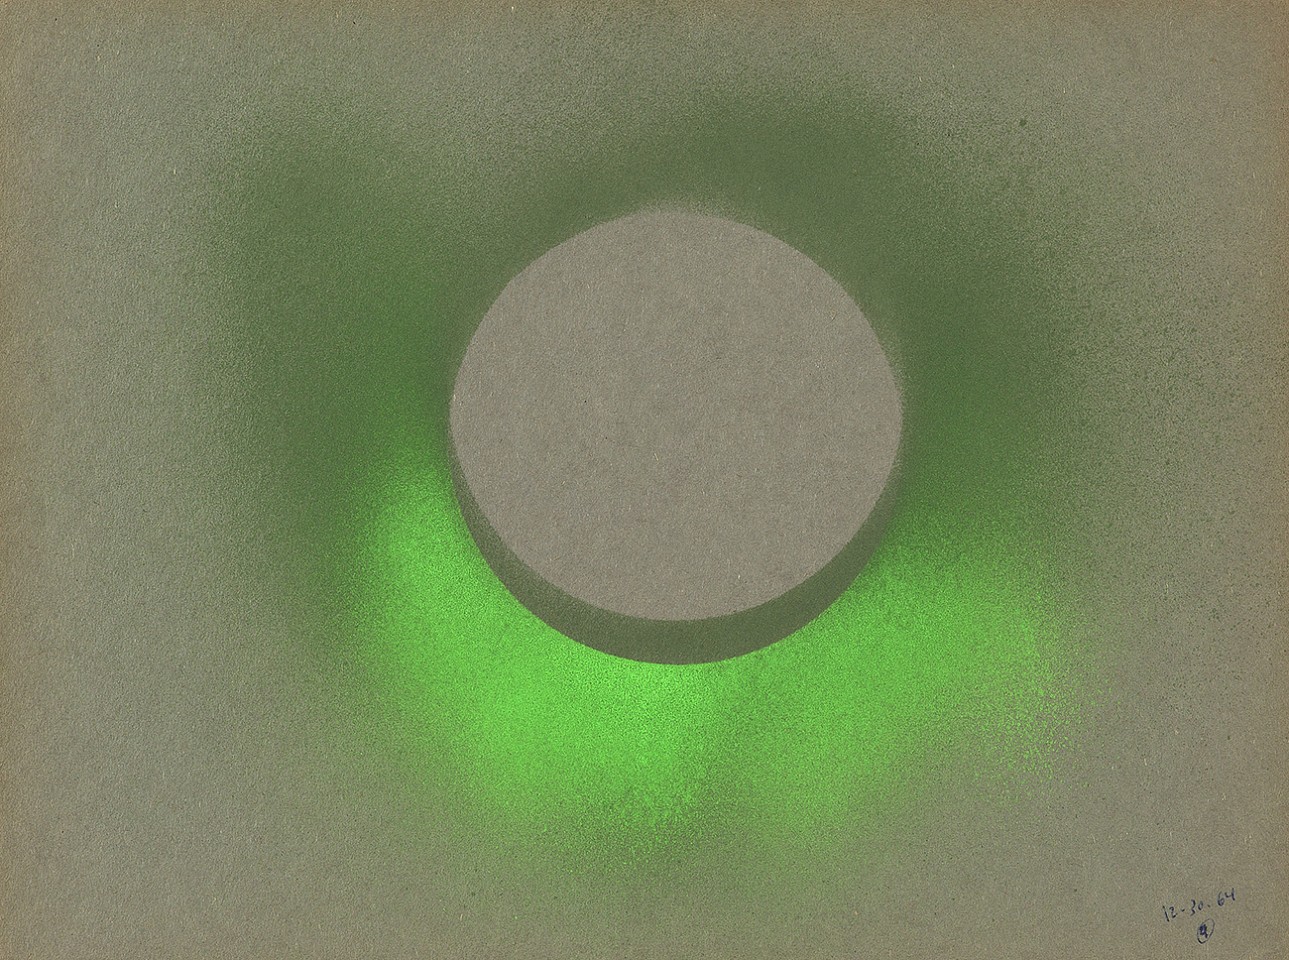 Walter Darby Bannard, Untitled (Green Krylon on Gray), 1964
Spraypaint on paper, 9 x 12 in. (22.9 x 30.5 cm)
BAN-00100